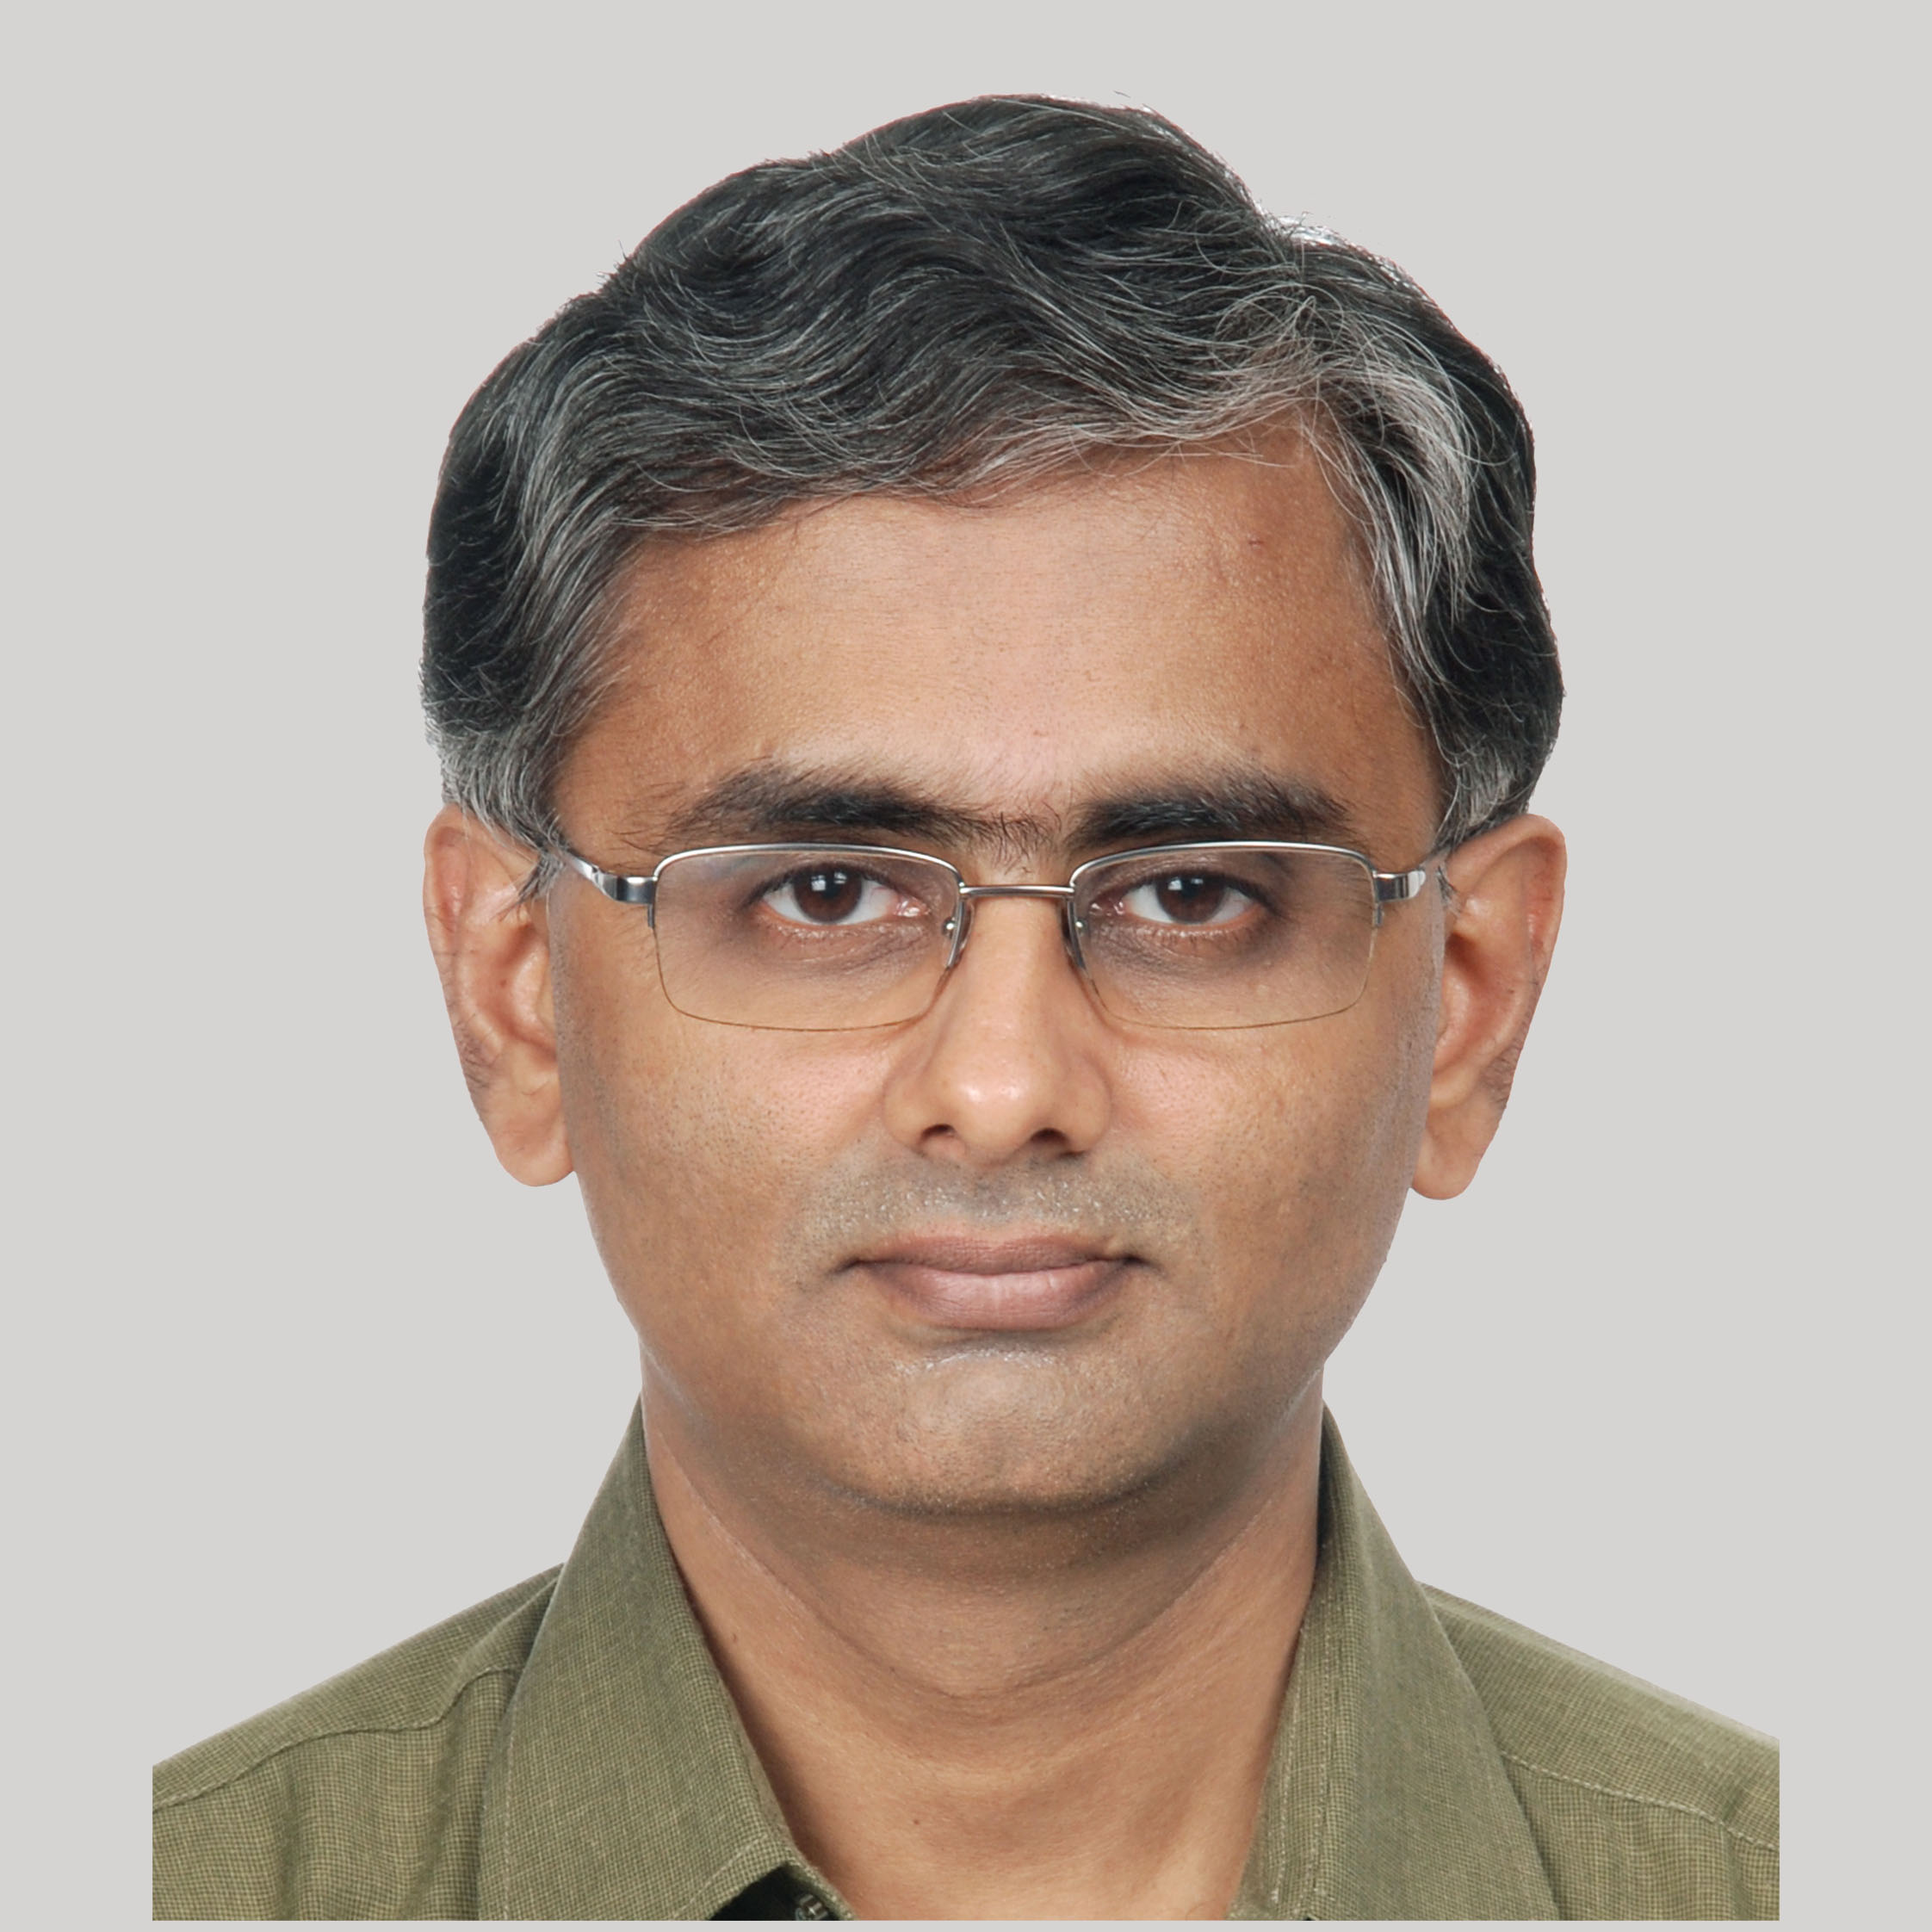 Director of IIT Madras, Chennai, India